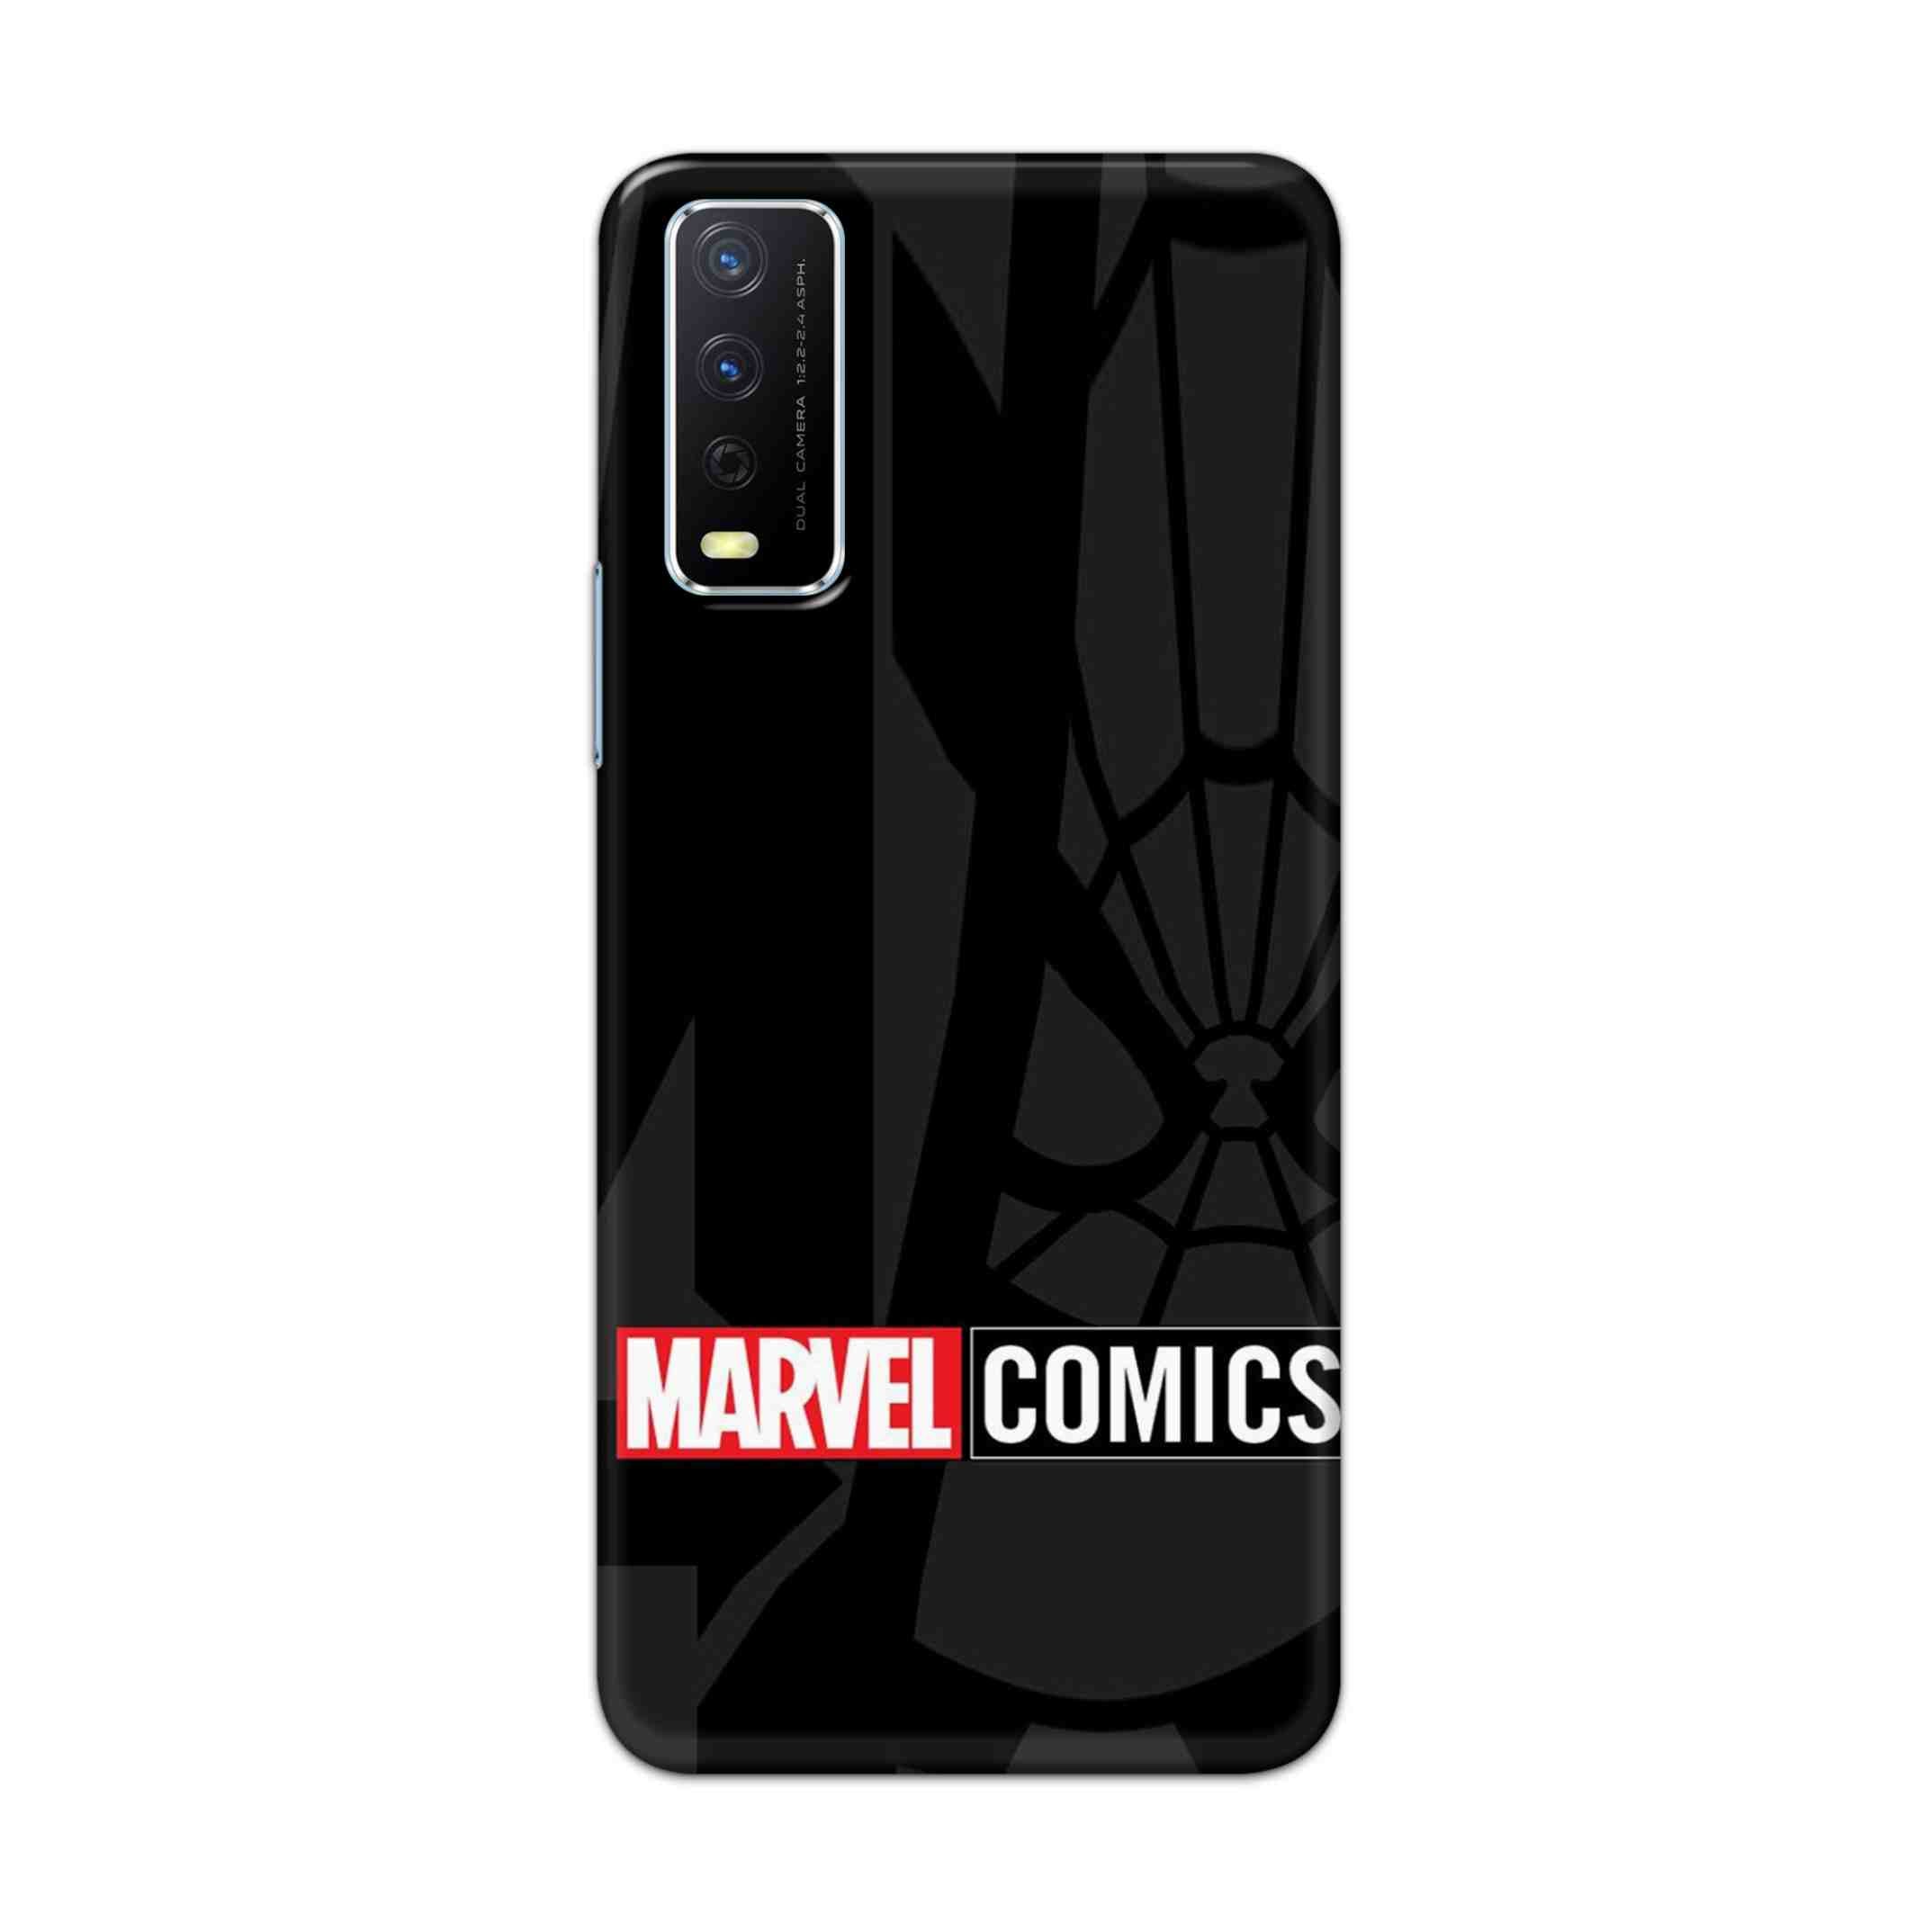 Buy Marvel Comics Hard Back Mobile Phone Case Cover For Vivo Y12s Online